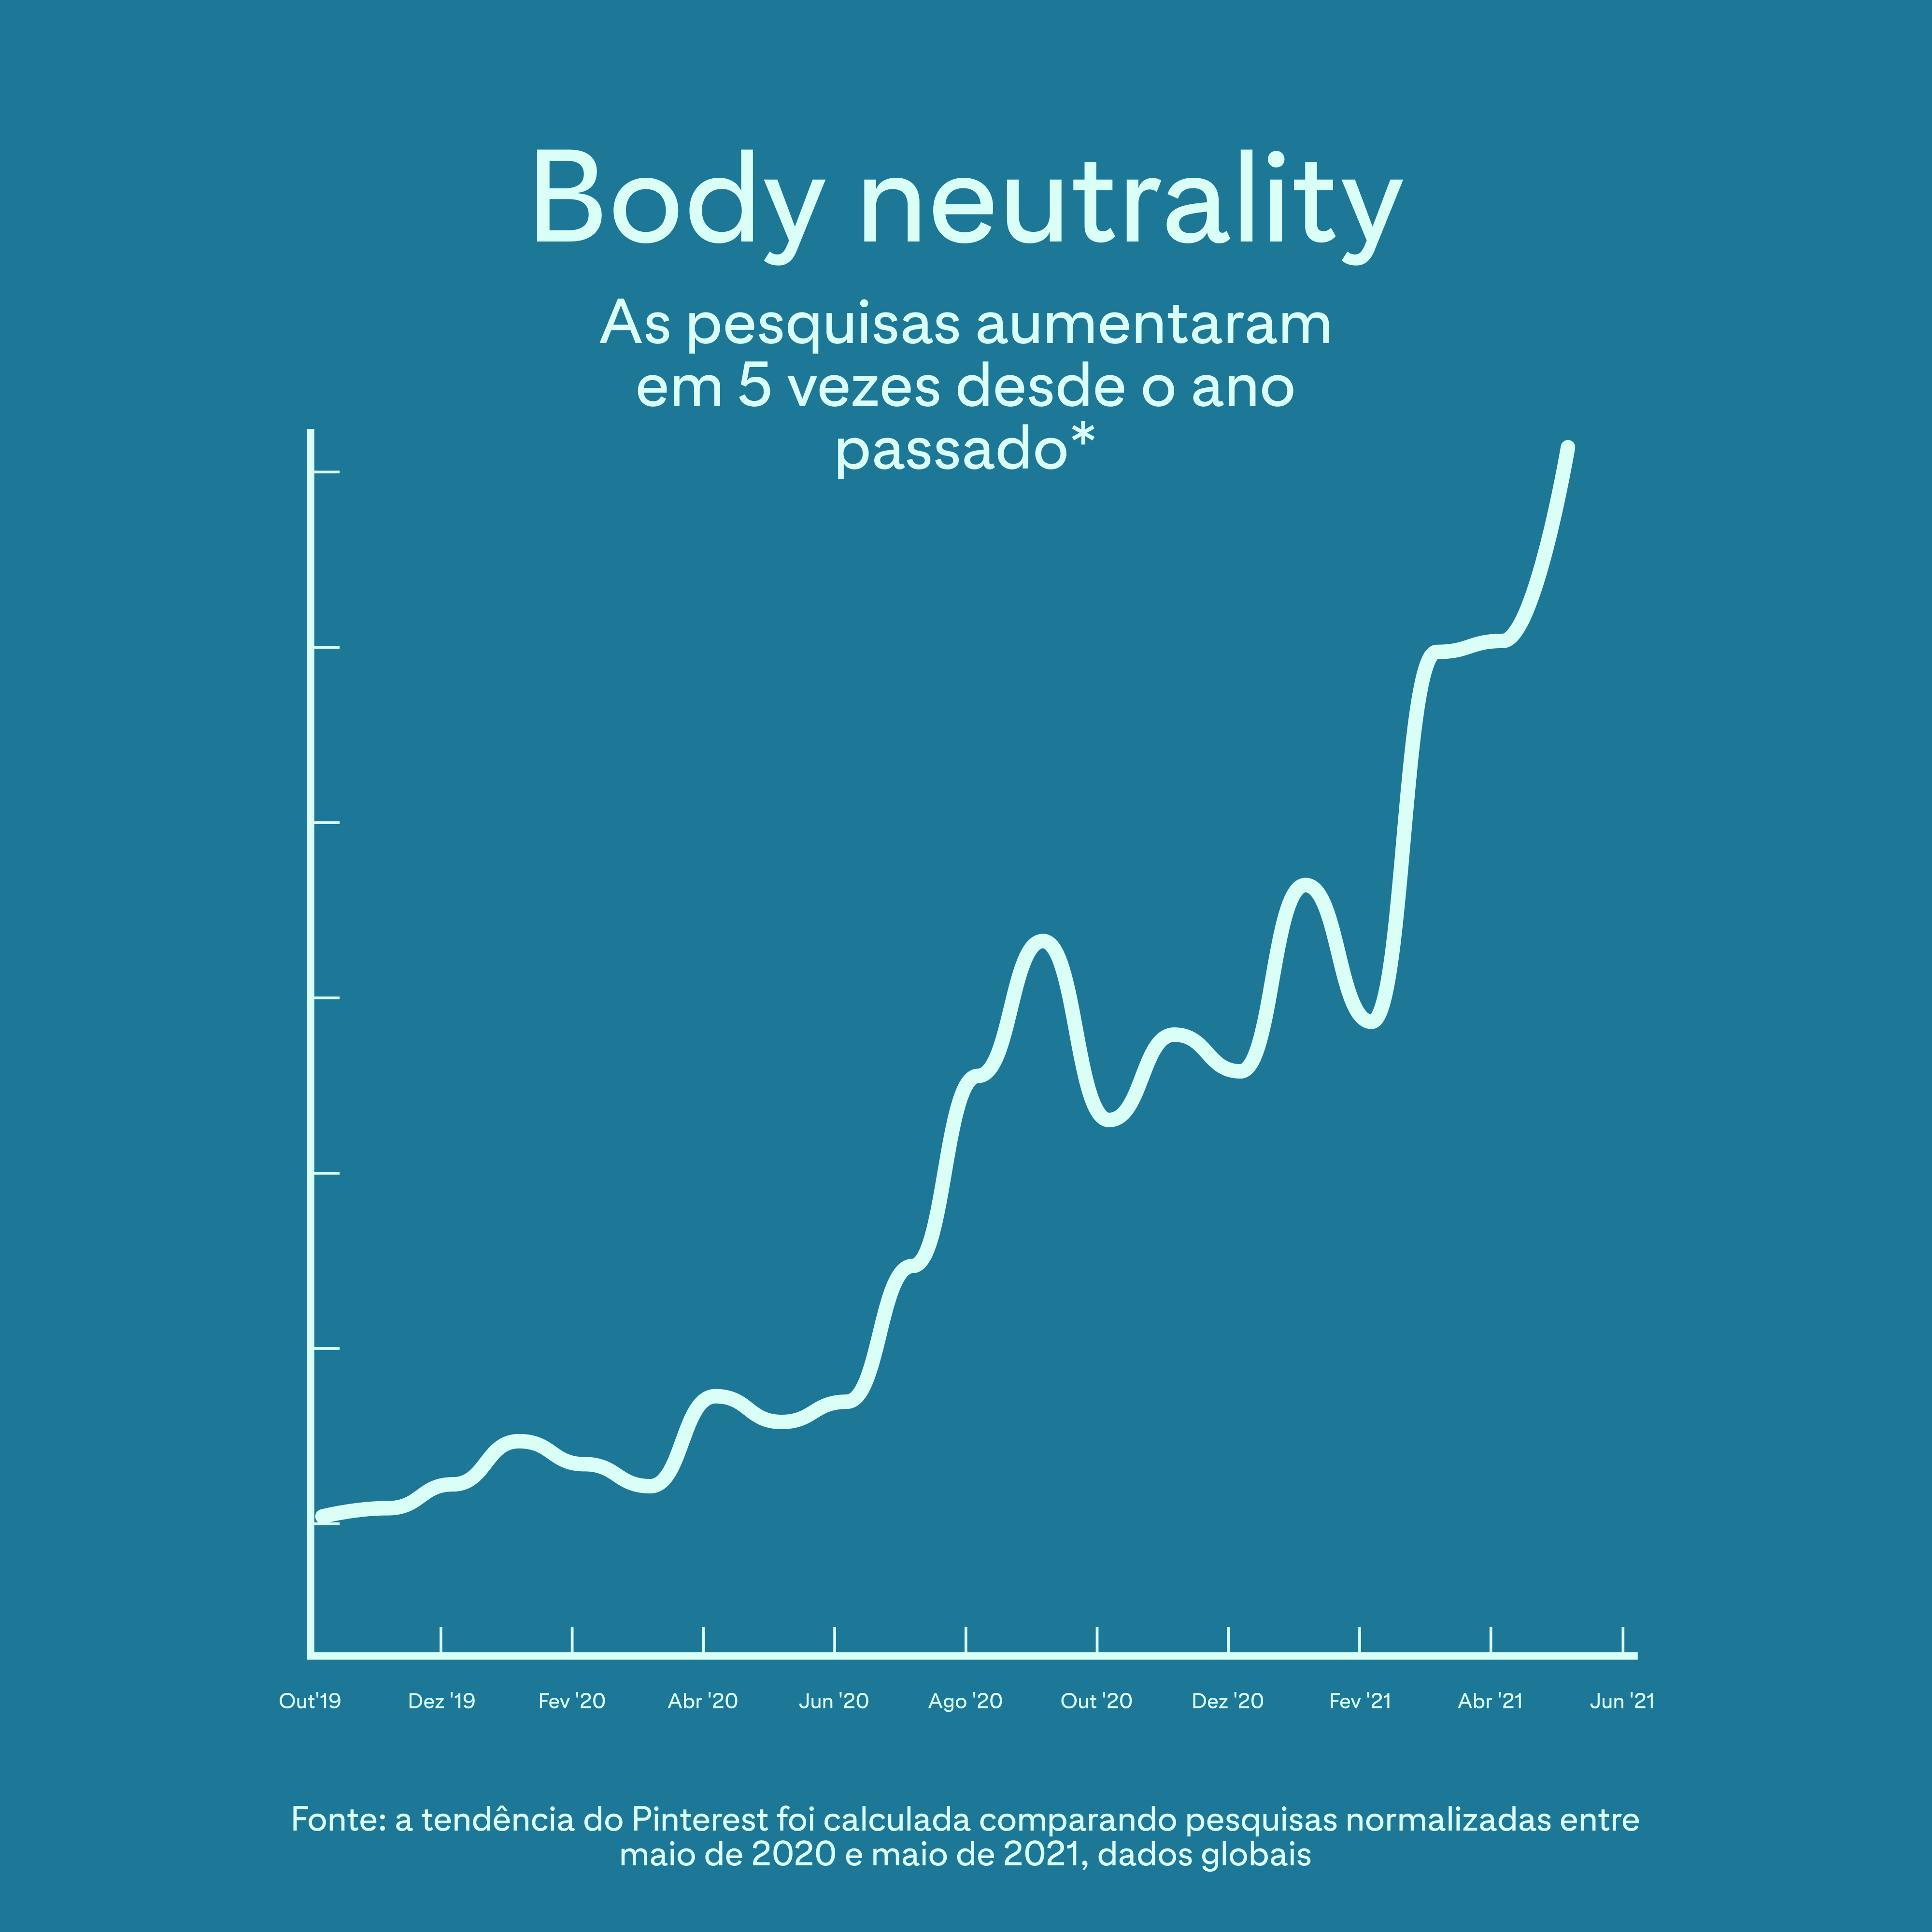 Body neutrality searches